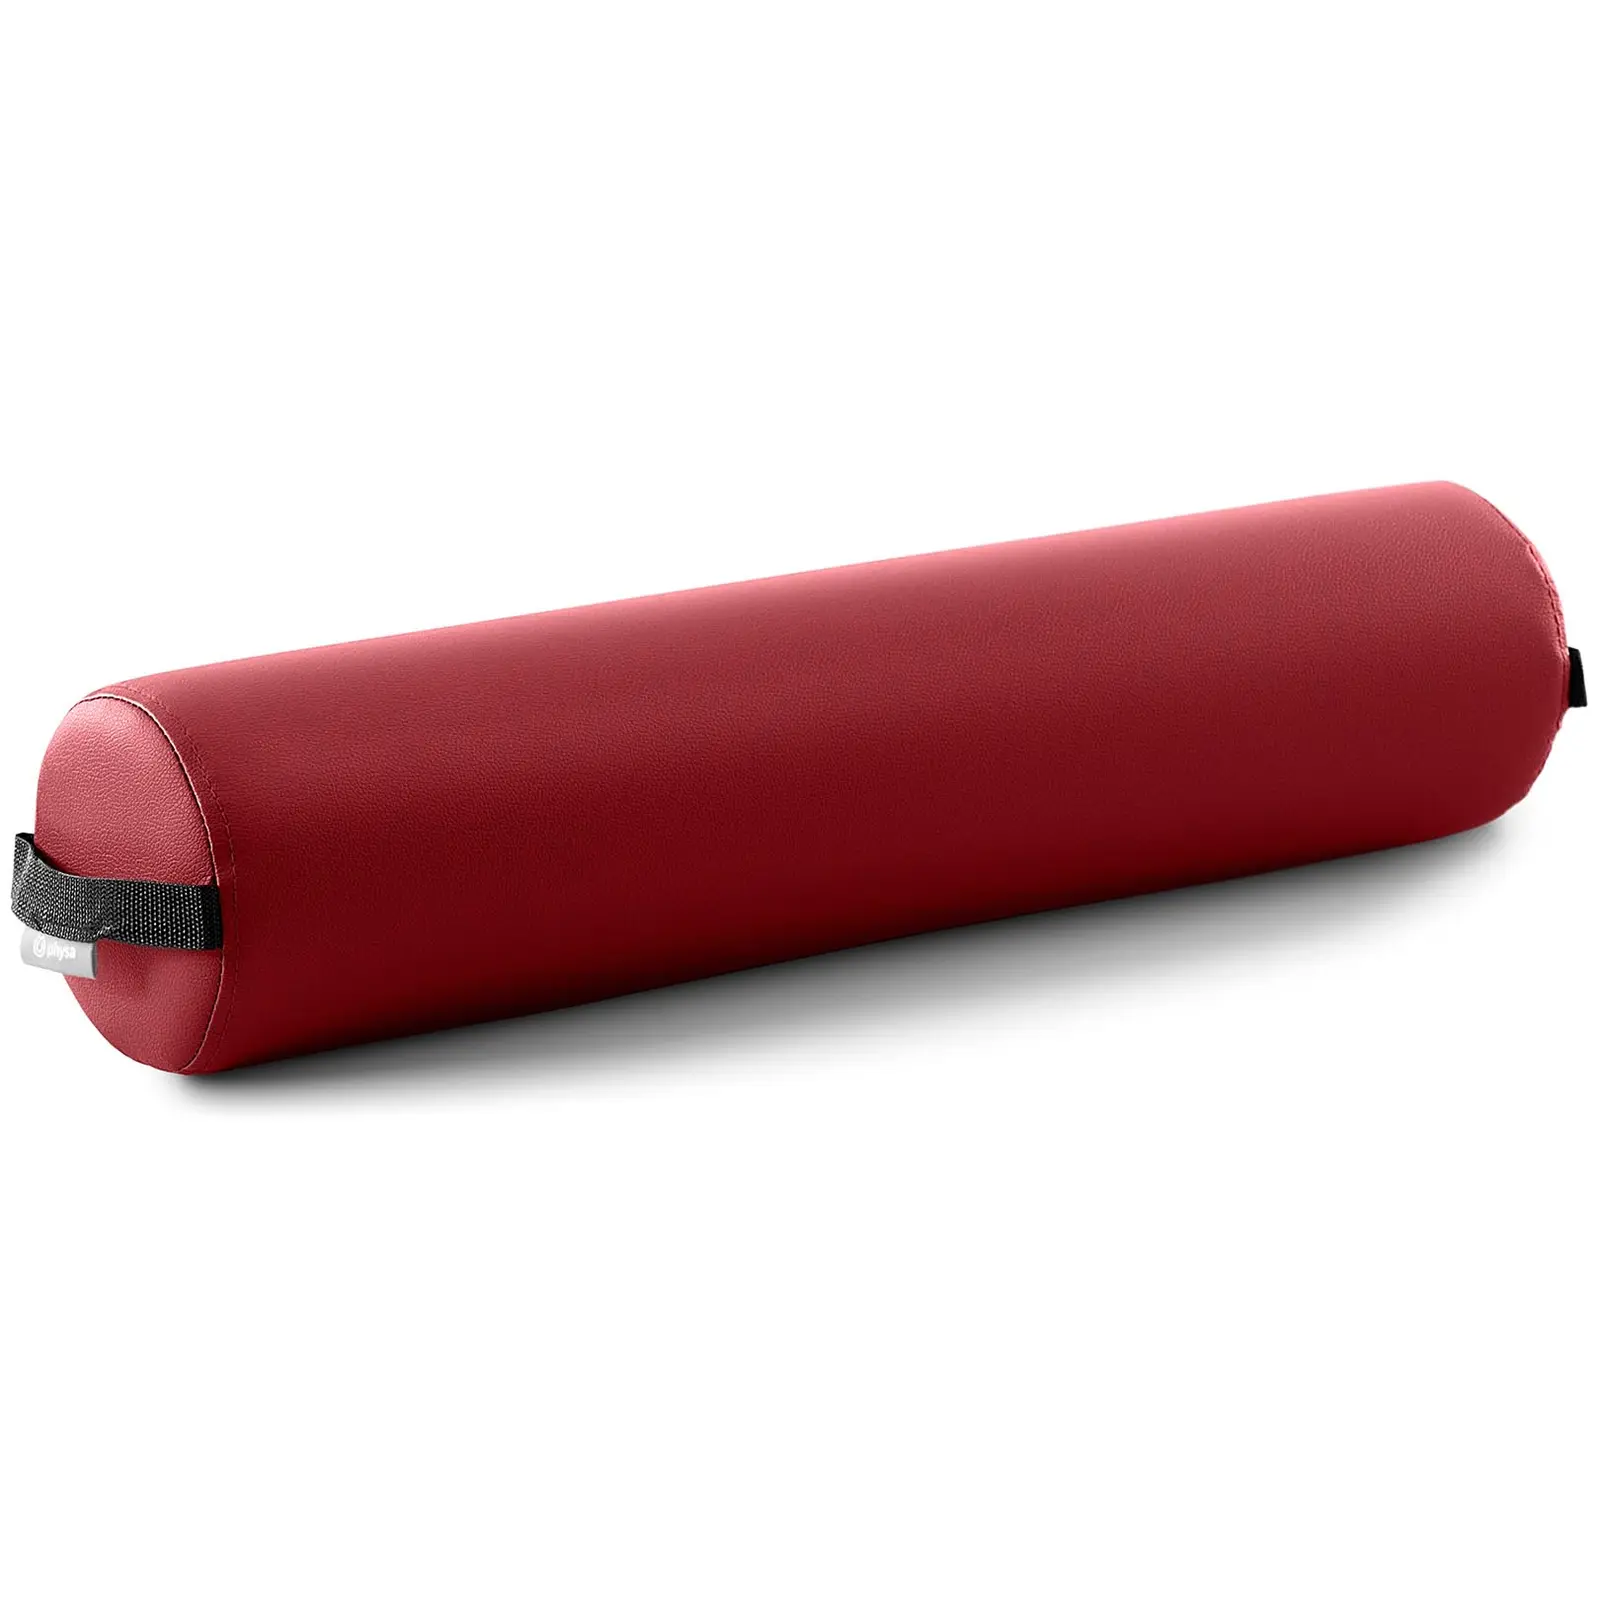 Massage Roller - full roll - Red